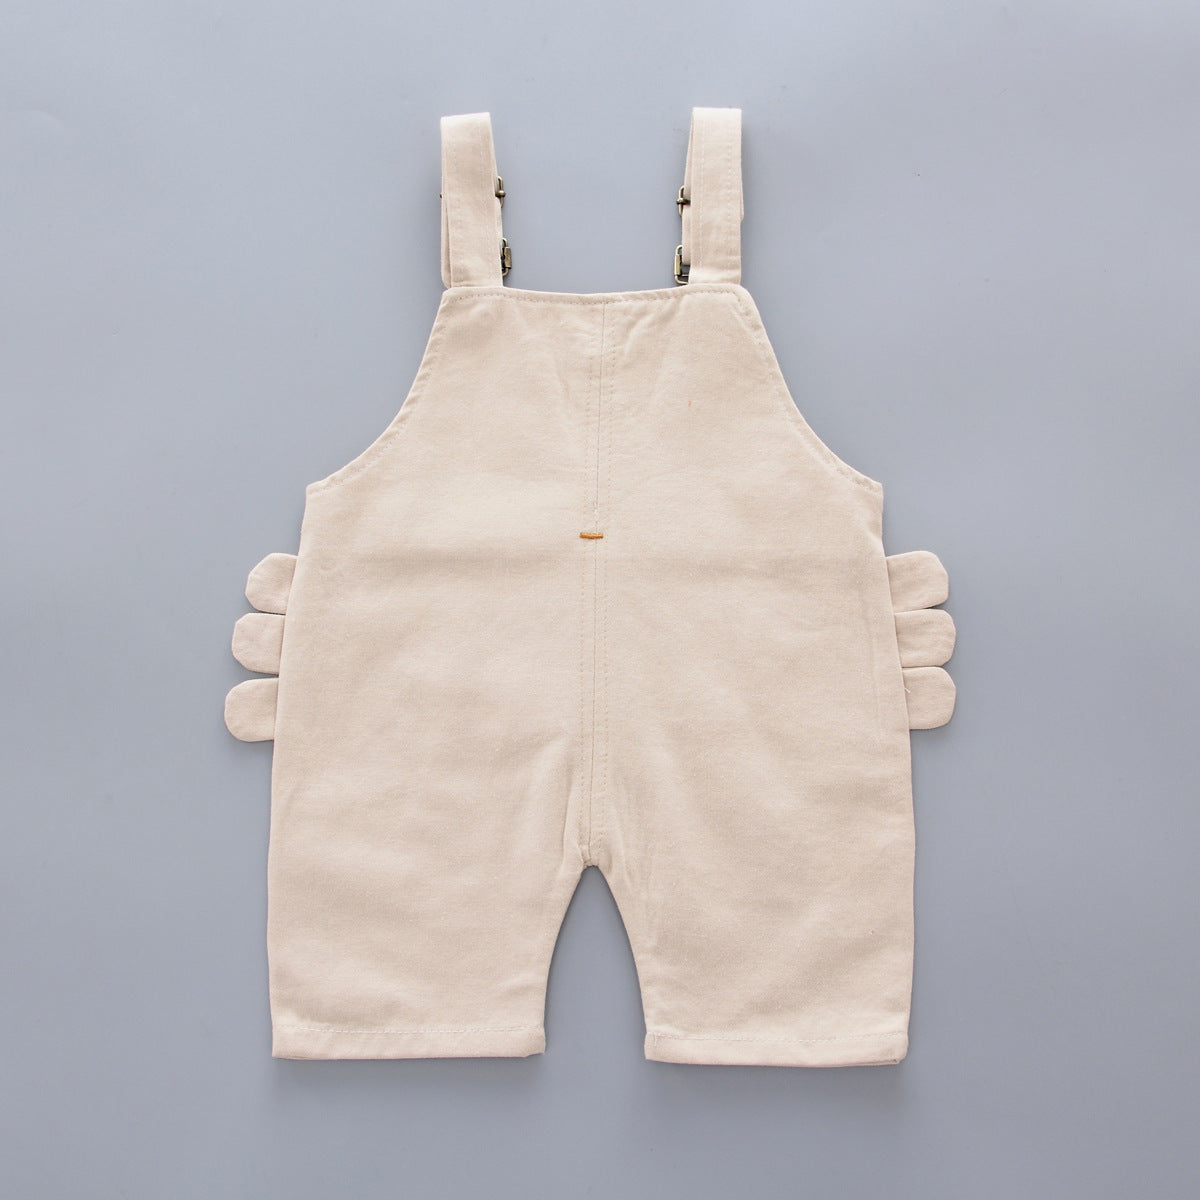 [368161] - Baju Setelan Overall Anak Import - Motif Striped Bee